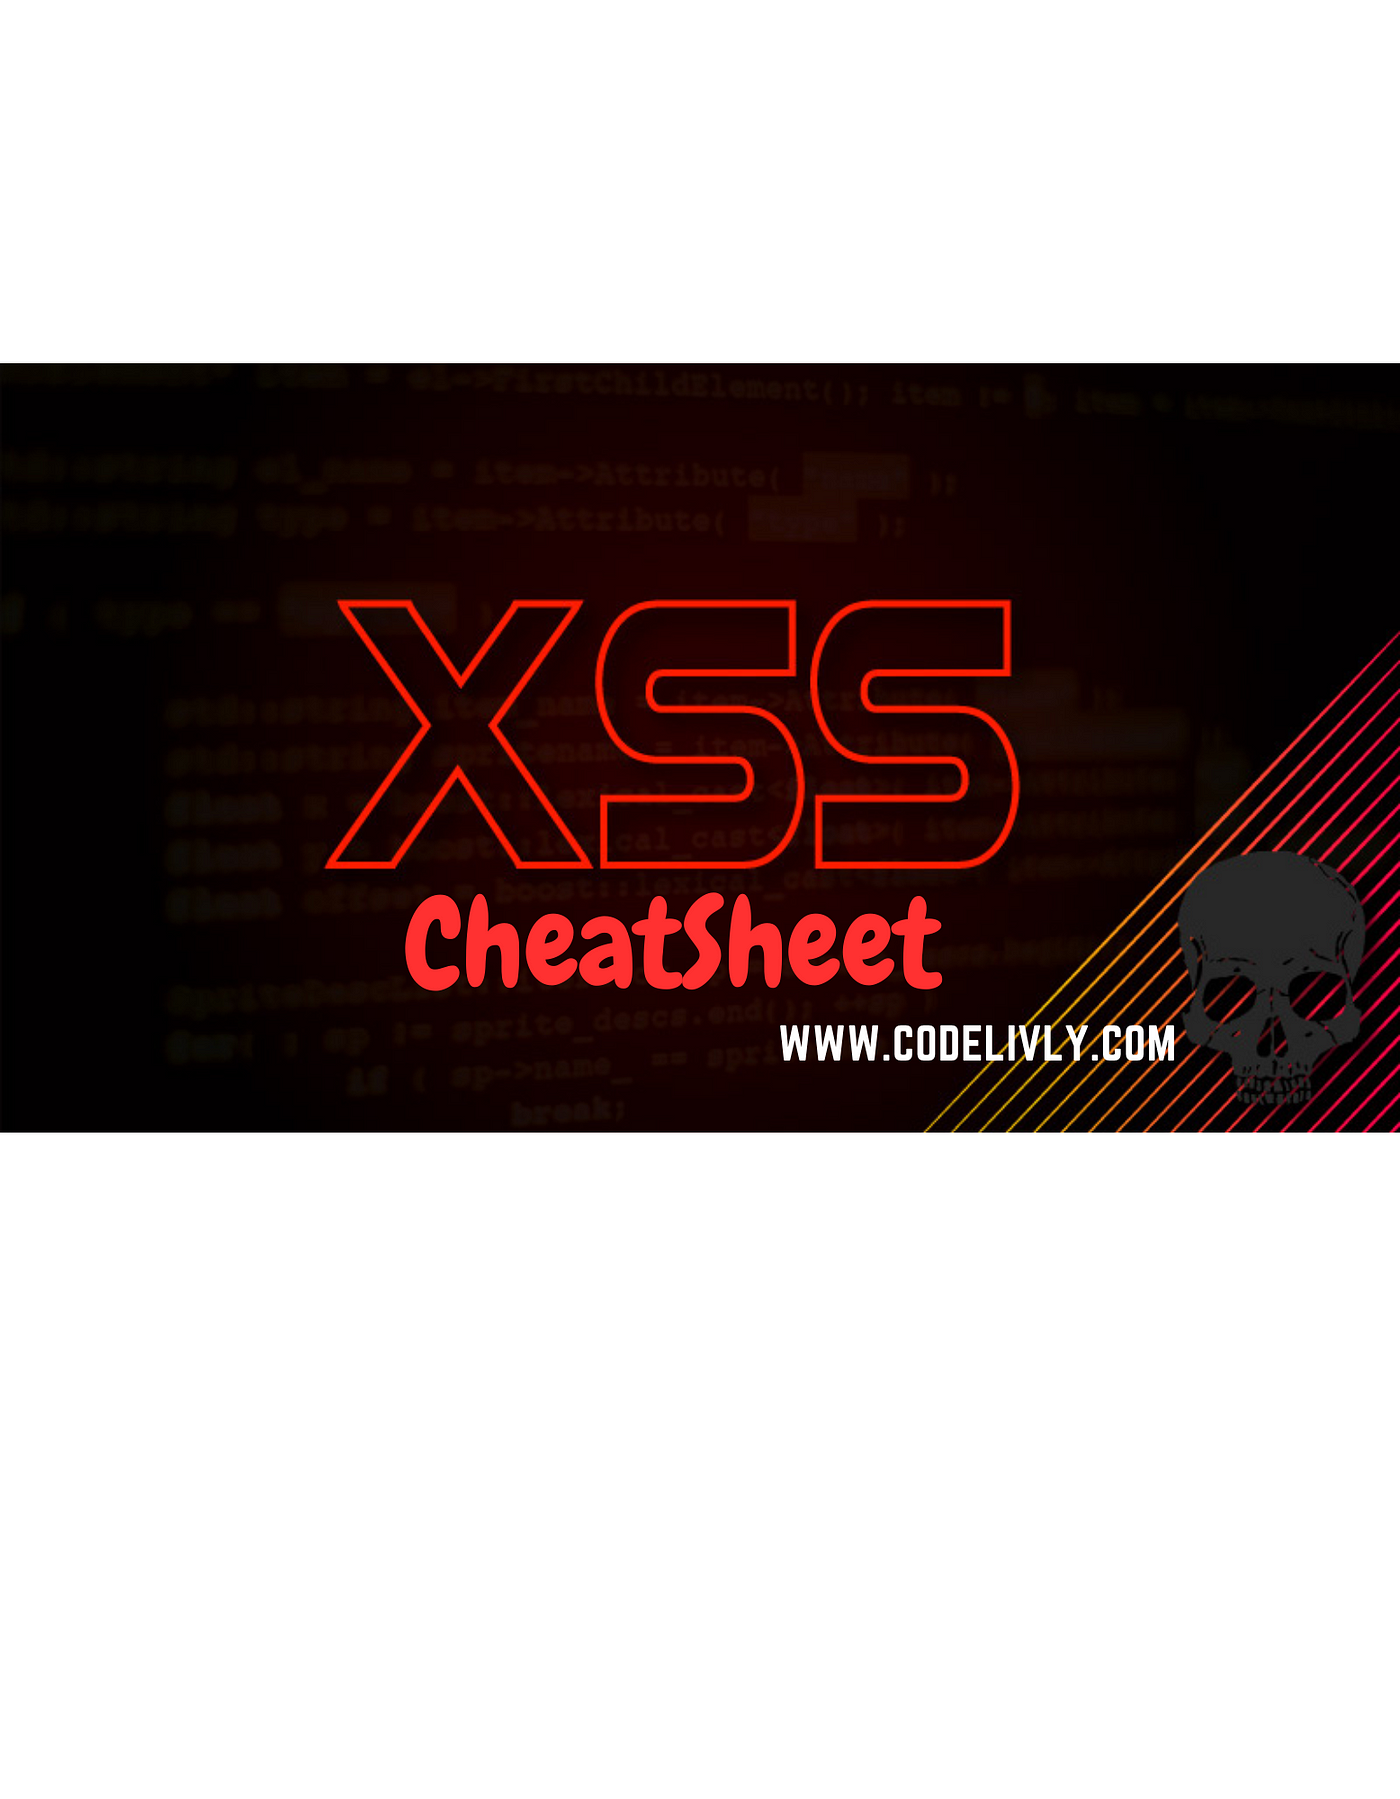 Cross-Site-Scripting (XSS) – Cheat Sheet – ironHackers